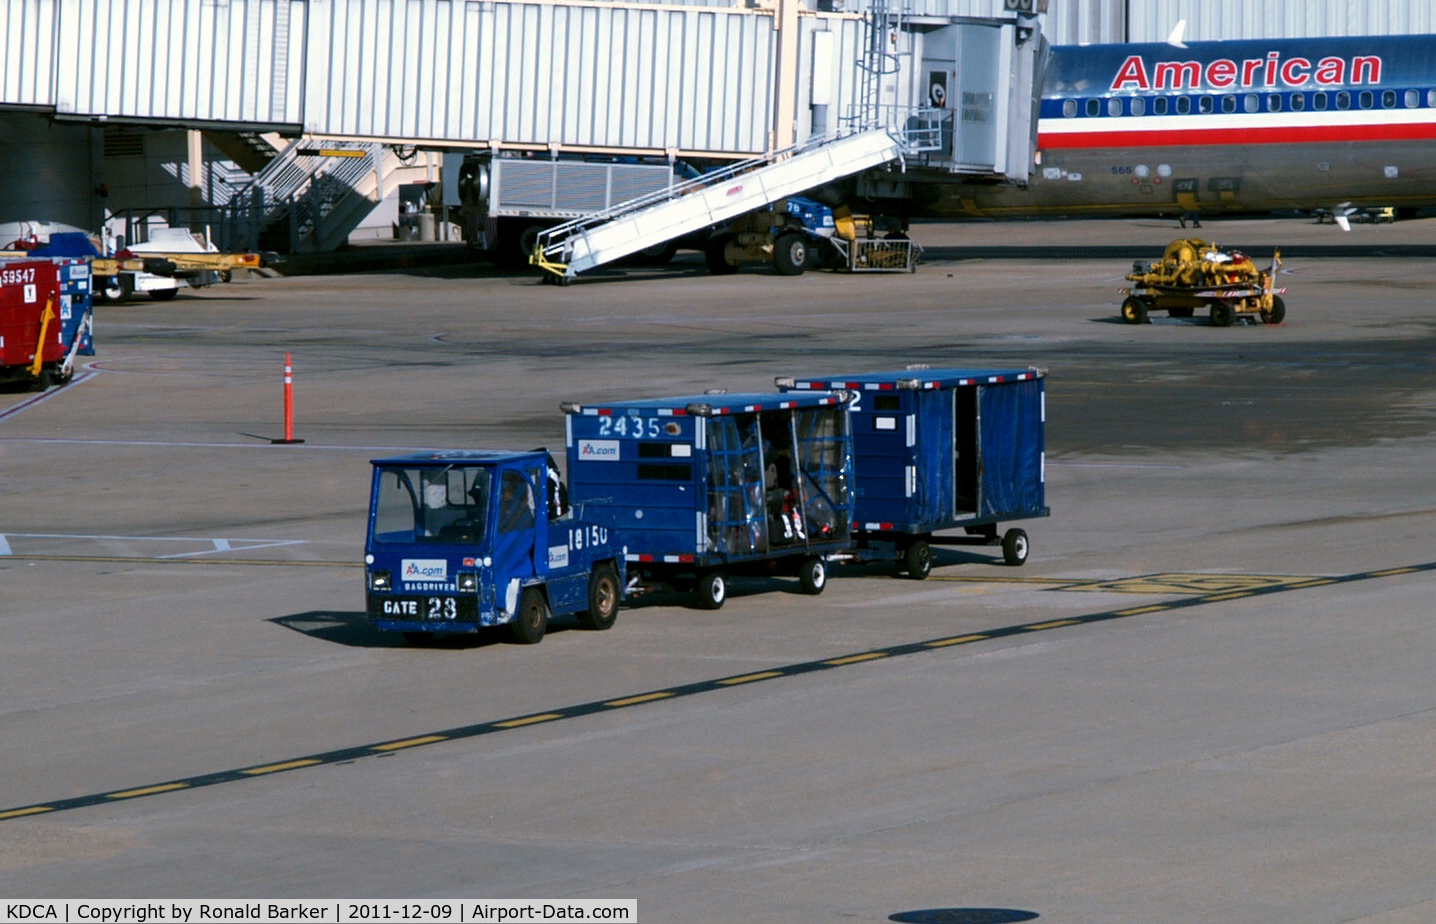 Ronald Reagan Washington National Airport (DCA) - Tug with # 18150 baggage carts on the ramp